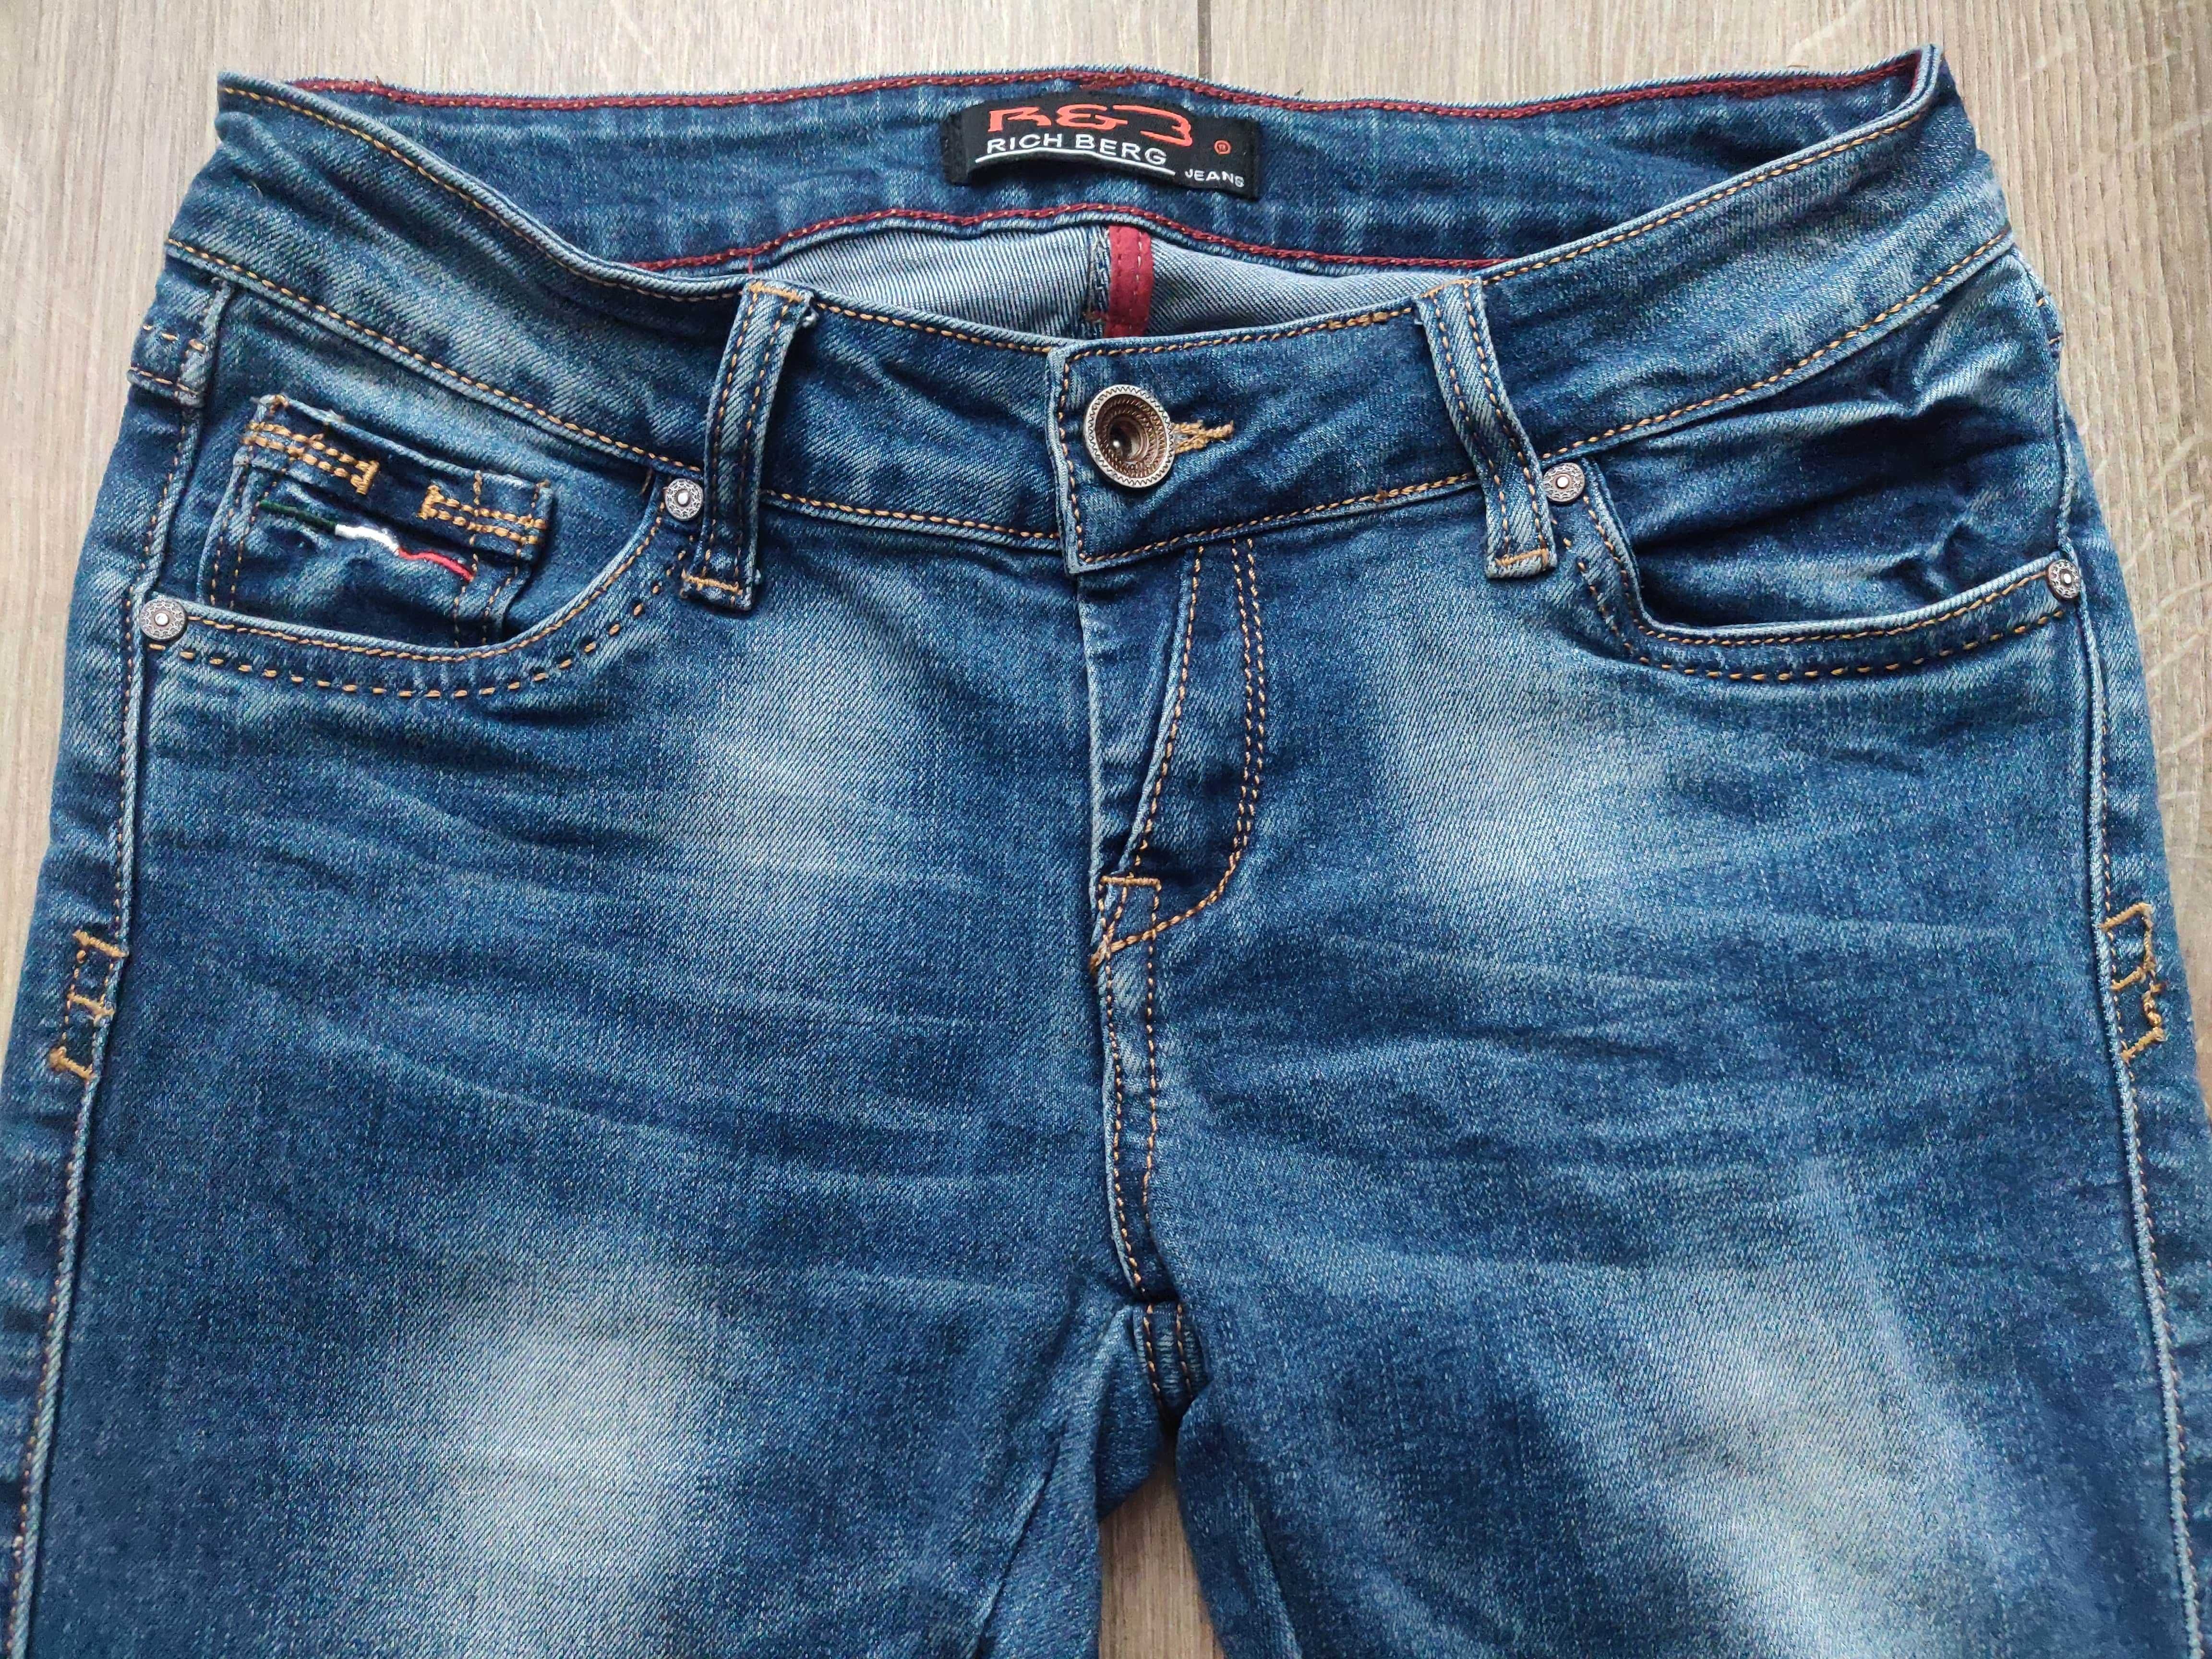 Джинсы женские Rich Berg (Italia Jeans) р. 26, синие